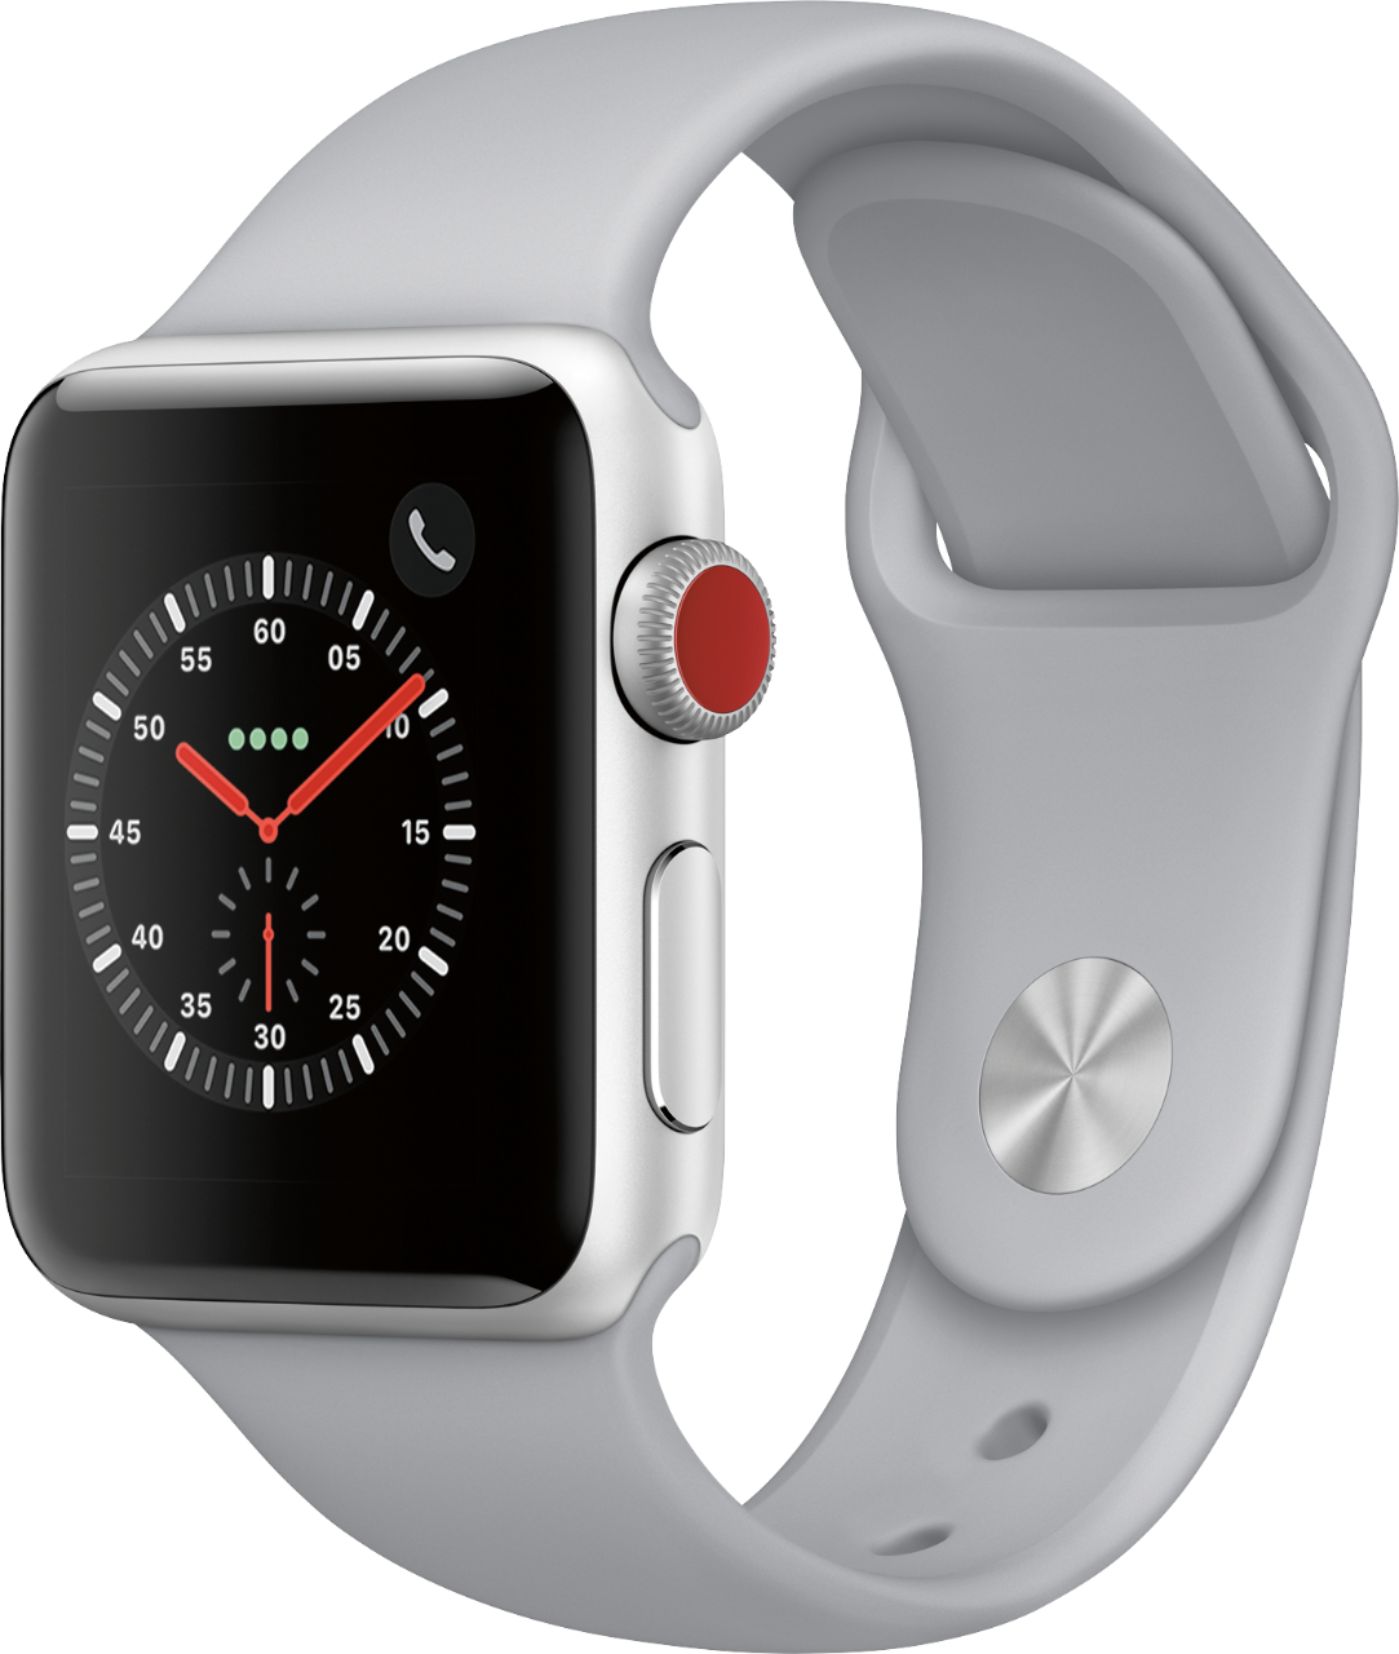 Apple Watch Series 3 (GPS + Cellular), 38mm Silver  - Best Buy